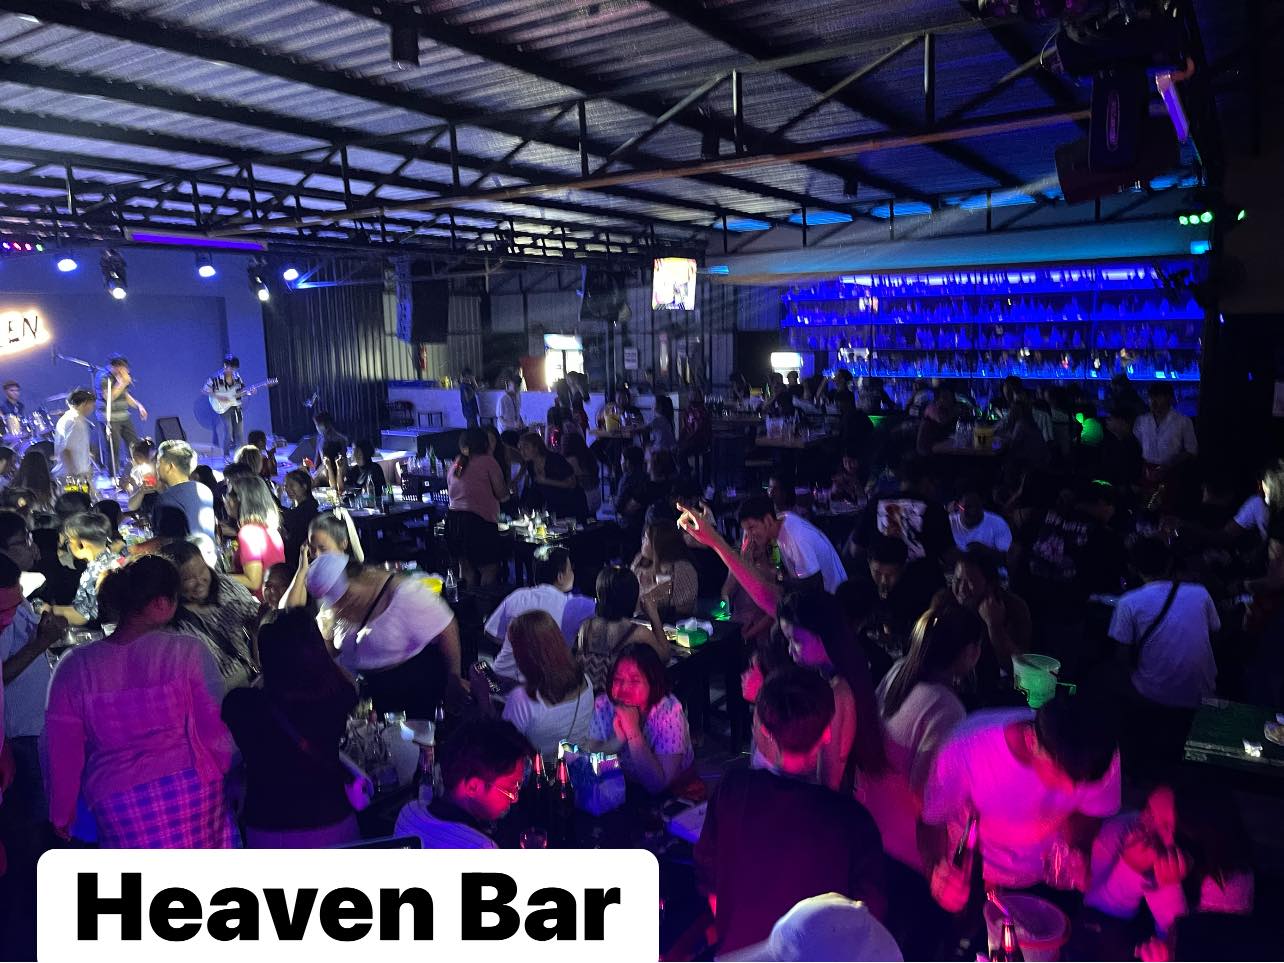 Heaven Bar (Heaven Bar) : จันทบุรี (Chanthaburi)